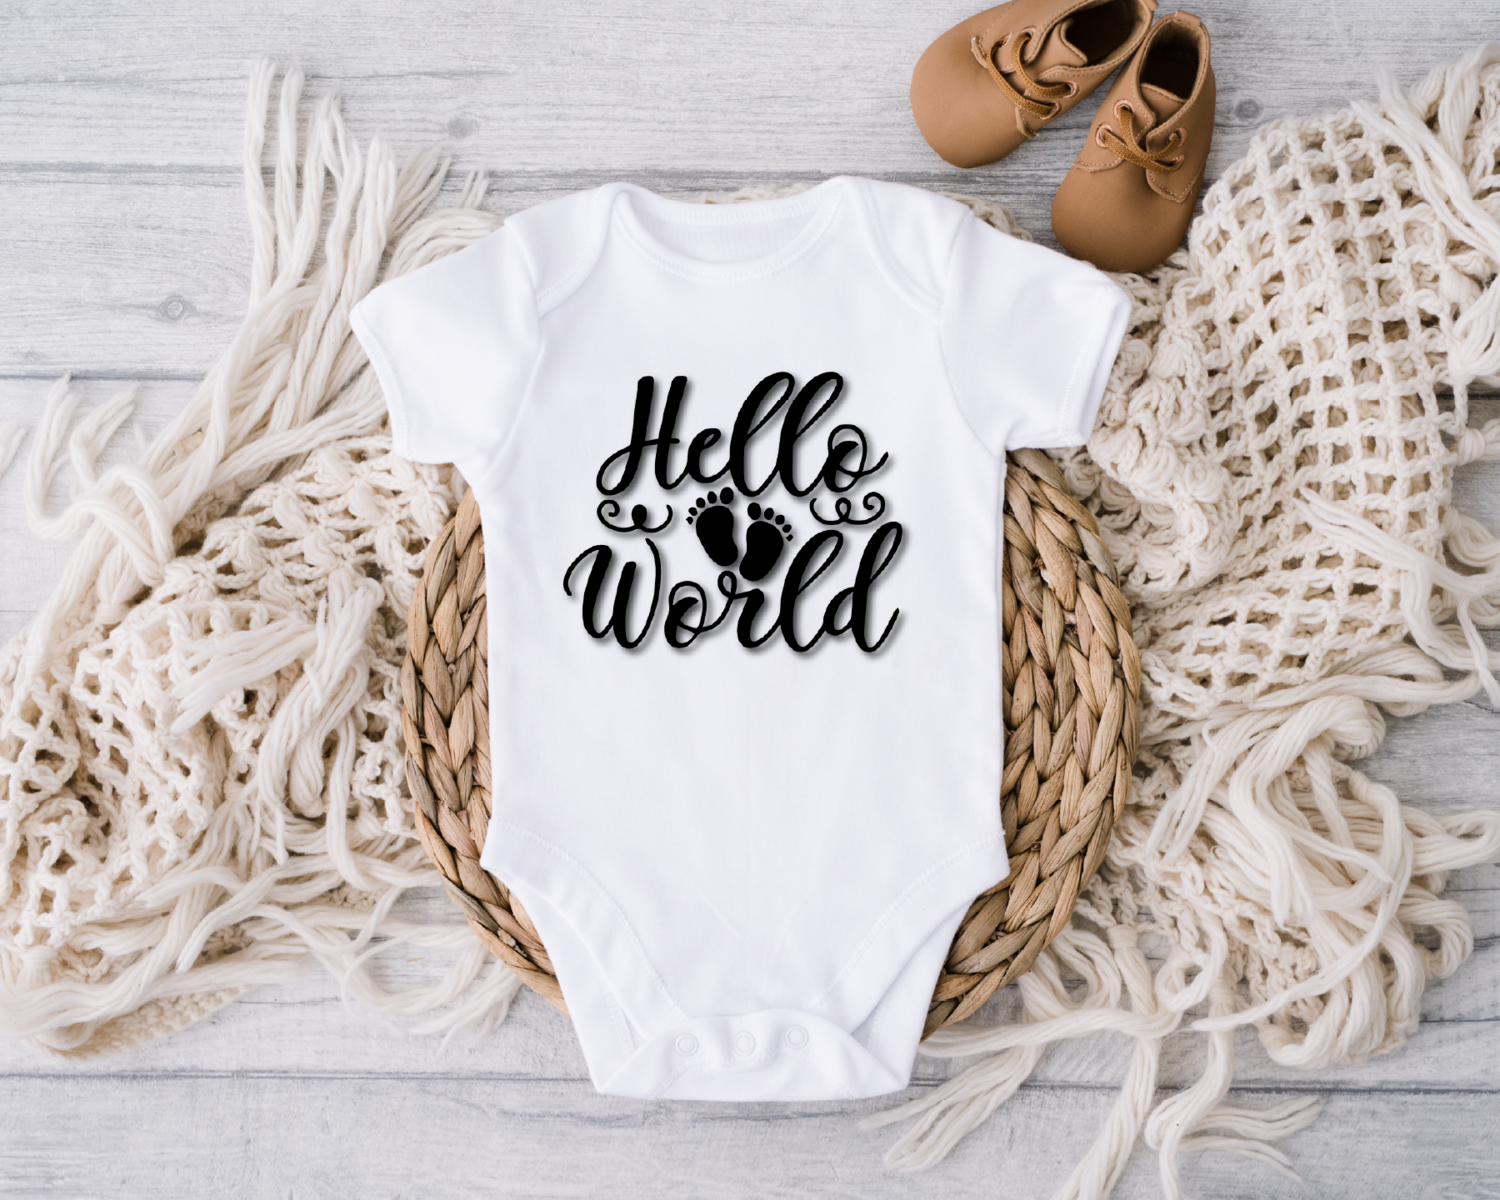 Hello World Baby Onesie, Baby Girl or Boy Arriving, Unisex Newborn Gift or Baby Shower Present, Pregnancy Announcement Reveal